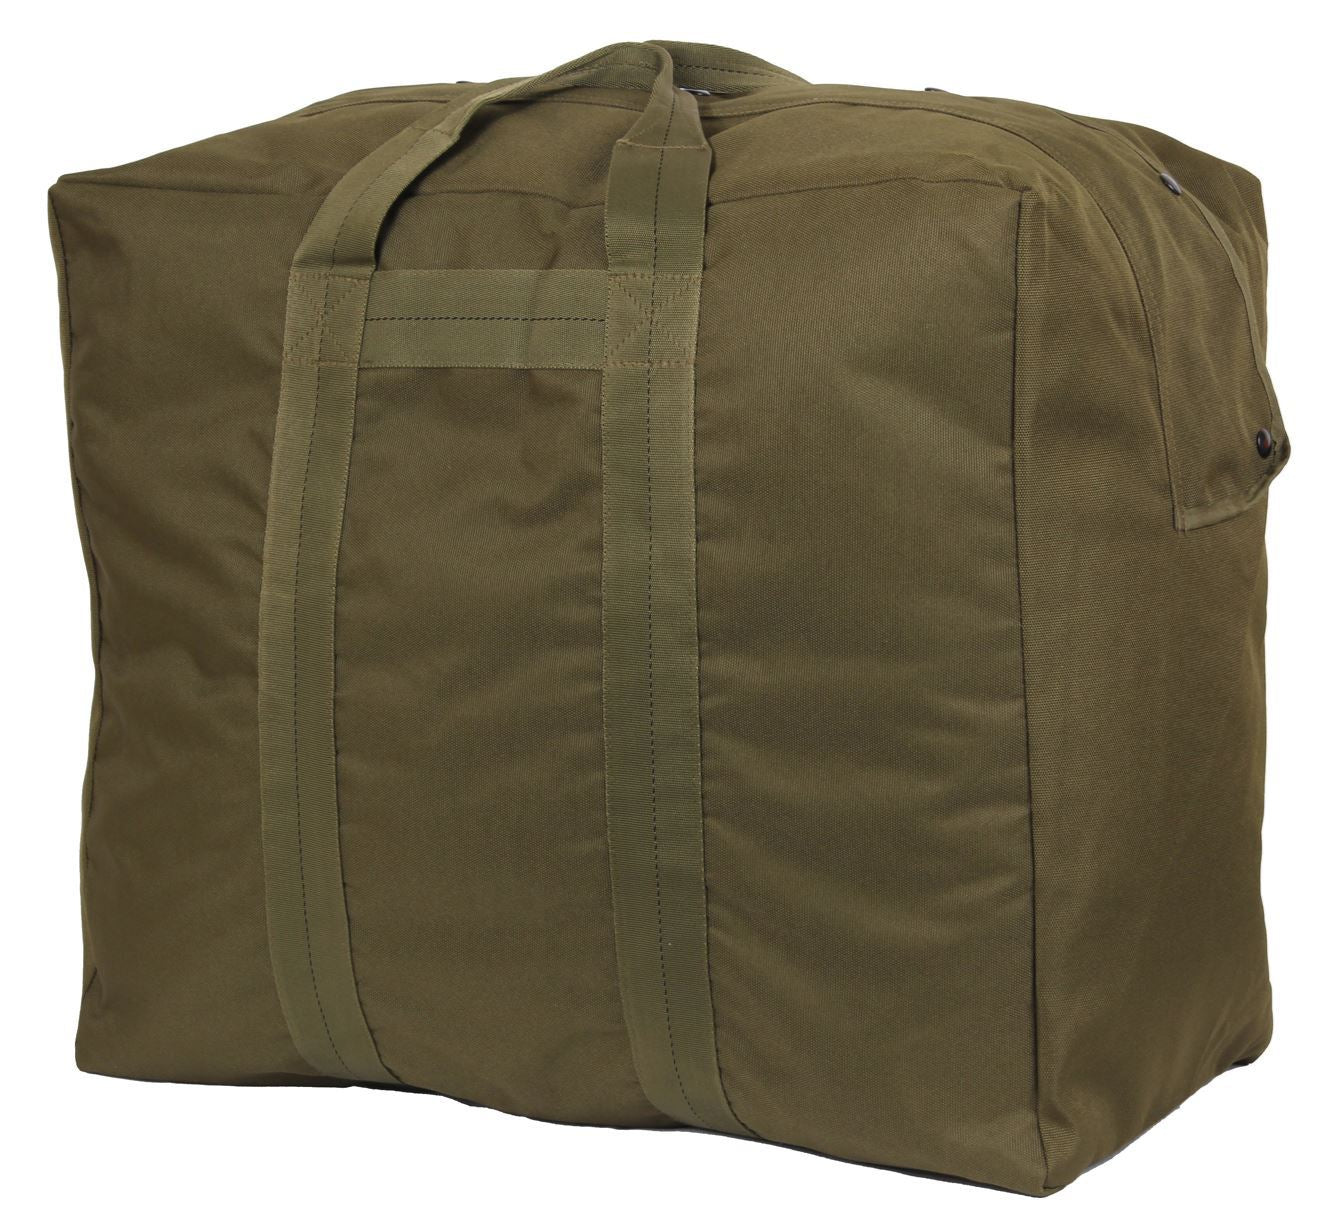 Tactical Enhanced Aviator Kit Gear Bag - Olive Drab.   1 Ea.